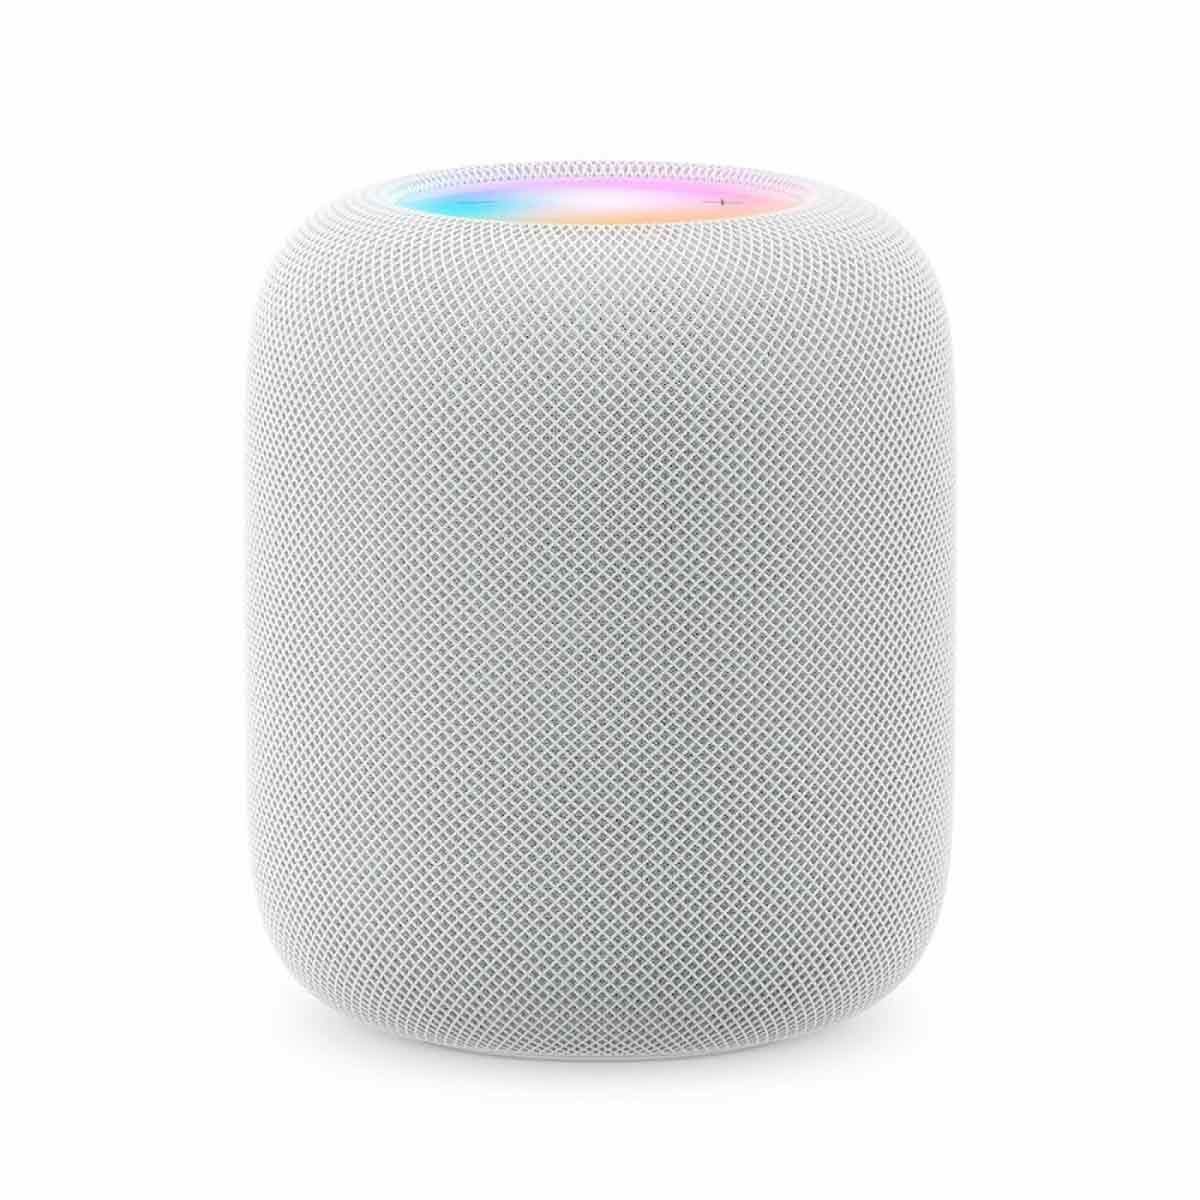 Apple HomePod - สีขาว